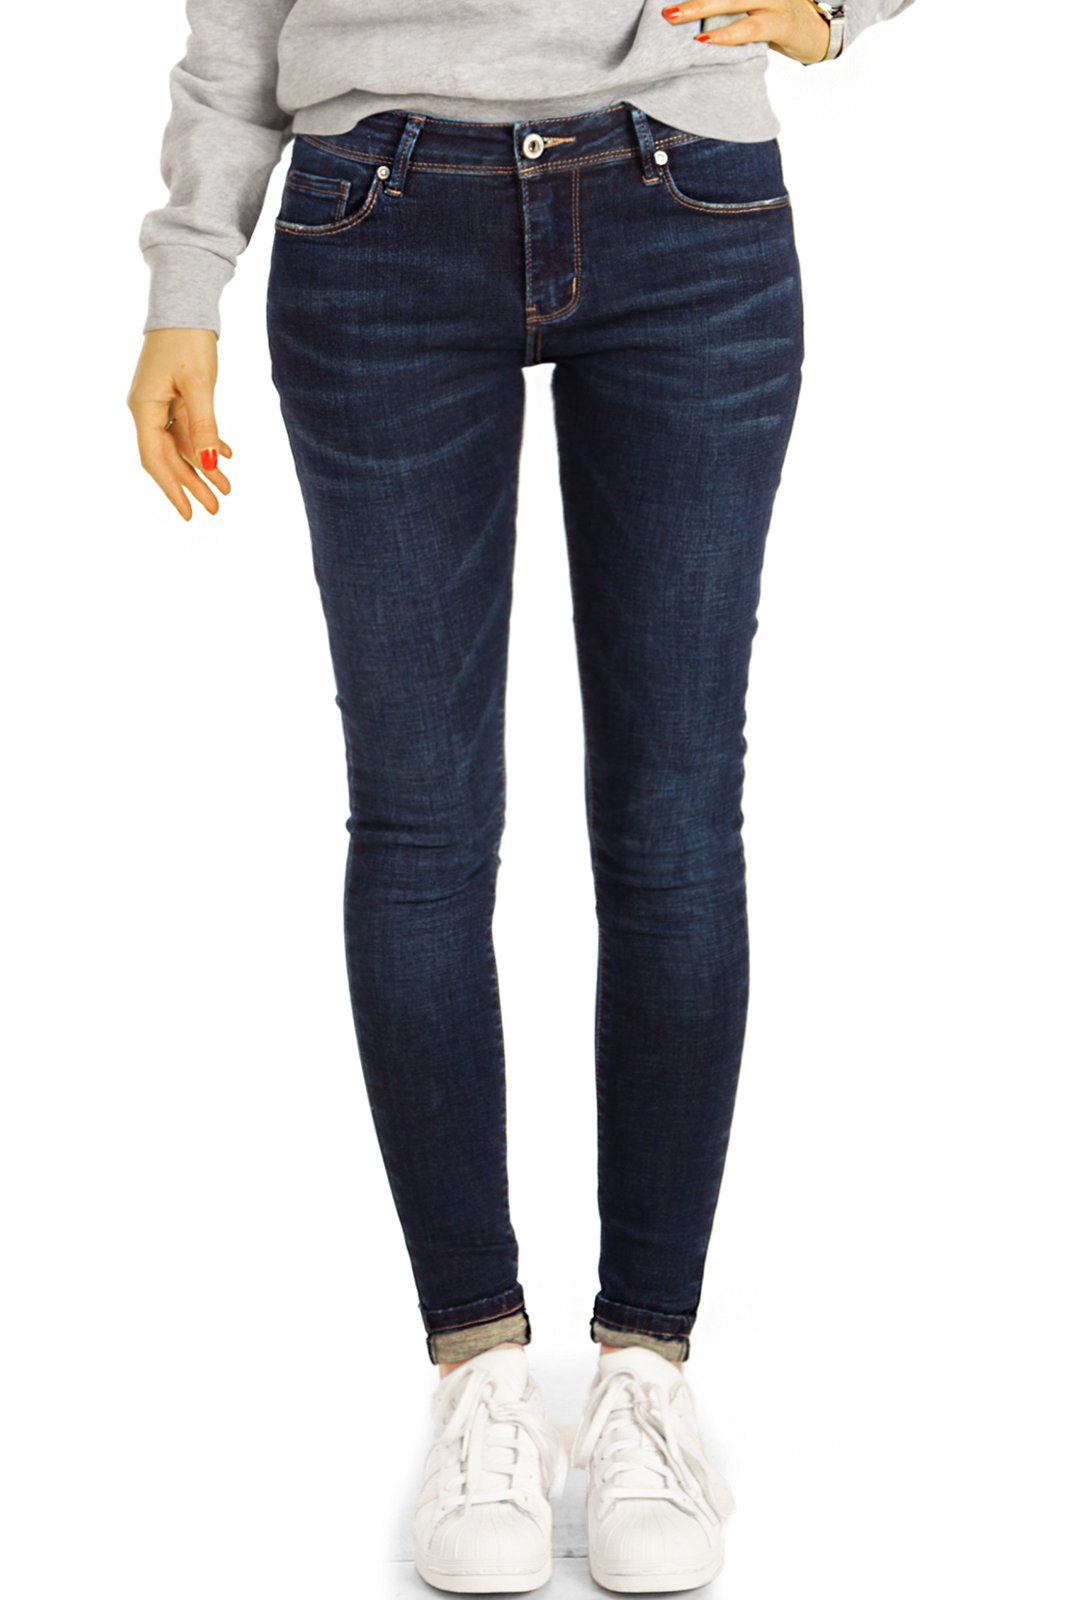 be styled Skinny-fit-Jeans Hüftjeans Röhrenjeans Skinny Fit Hosen stretch Jeans - Damen - j15k-2 mit Stretch-Anteil, 5-Pocket-Style dunkelblau